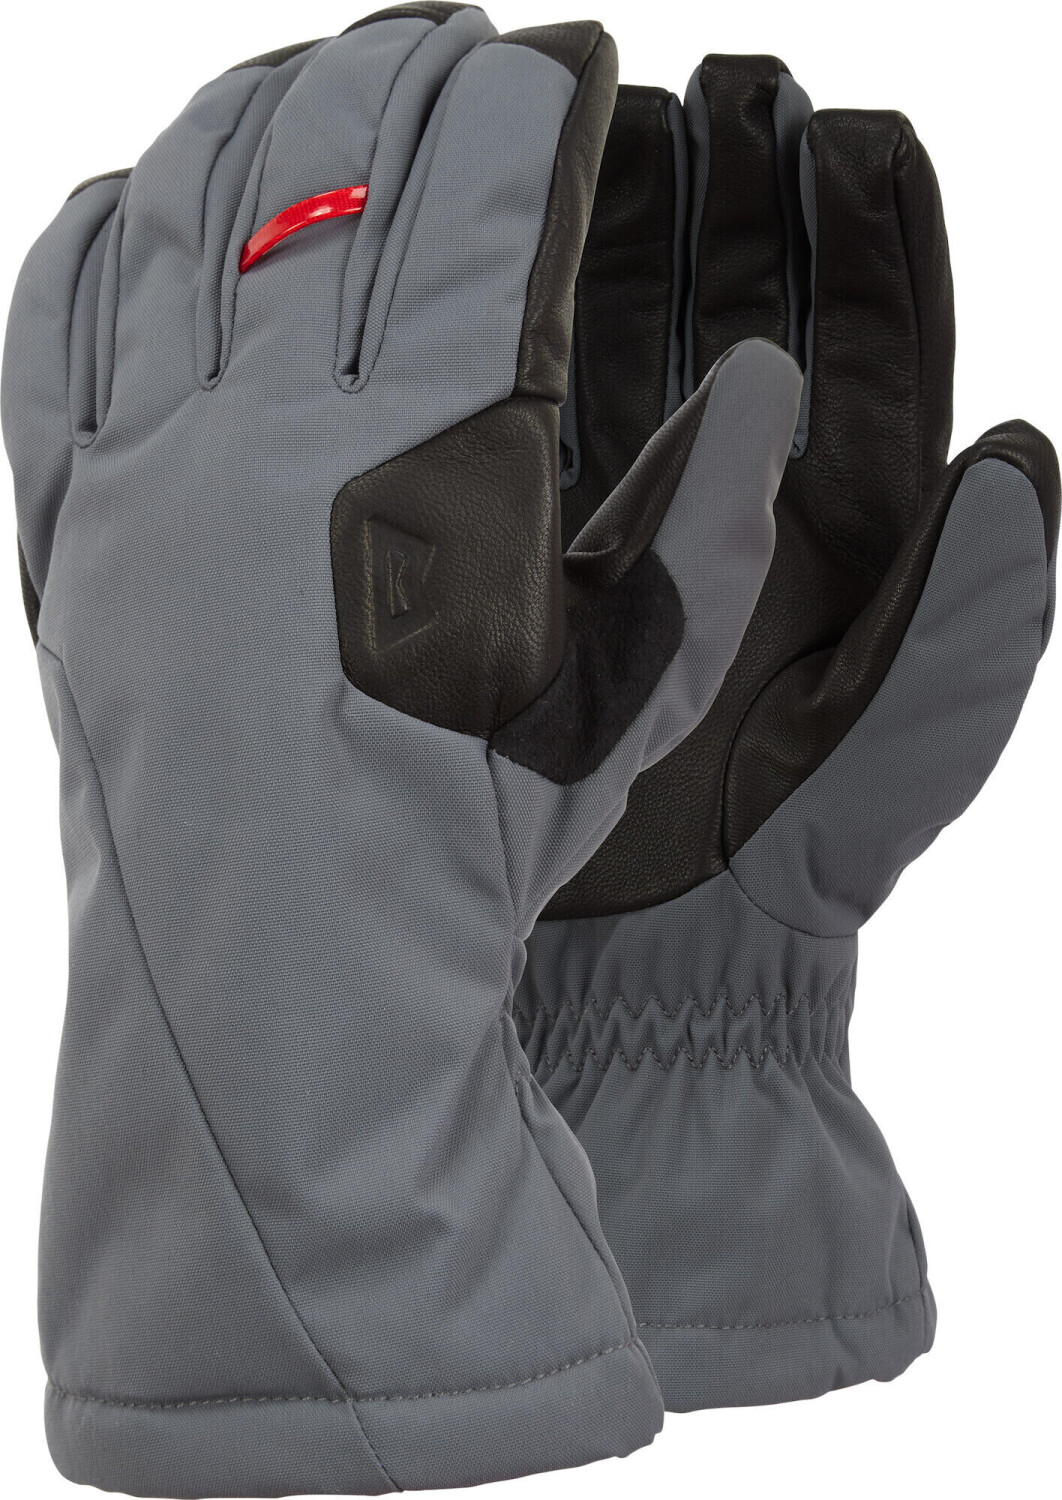 Photos - Ski Wear Mountain Equipment Guide Glove flint grey/black 